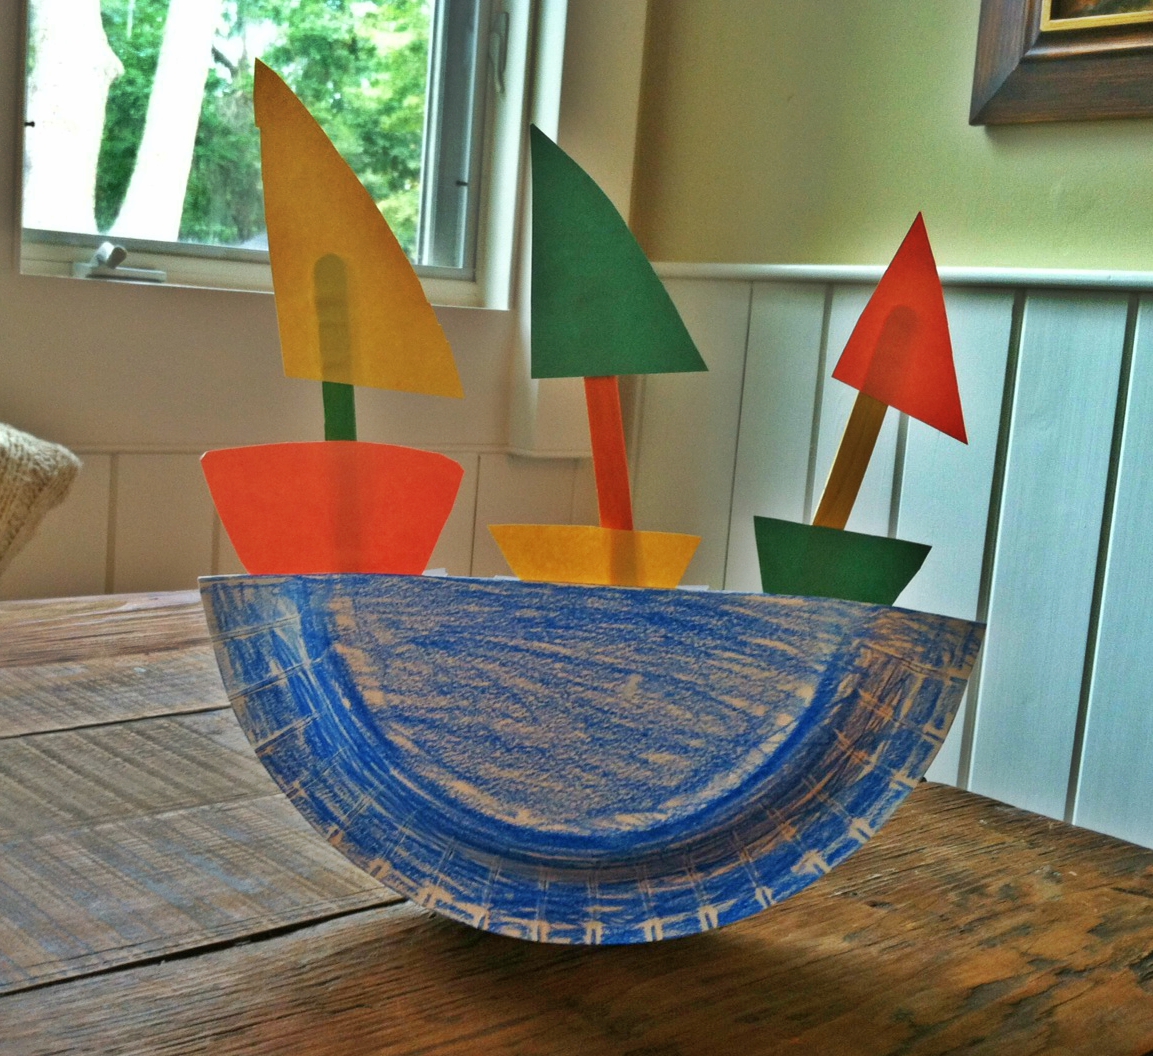 Christopher Columbus Ship Craft | Homeschooled Kids Online